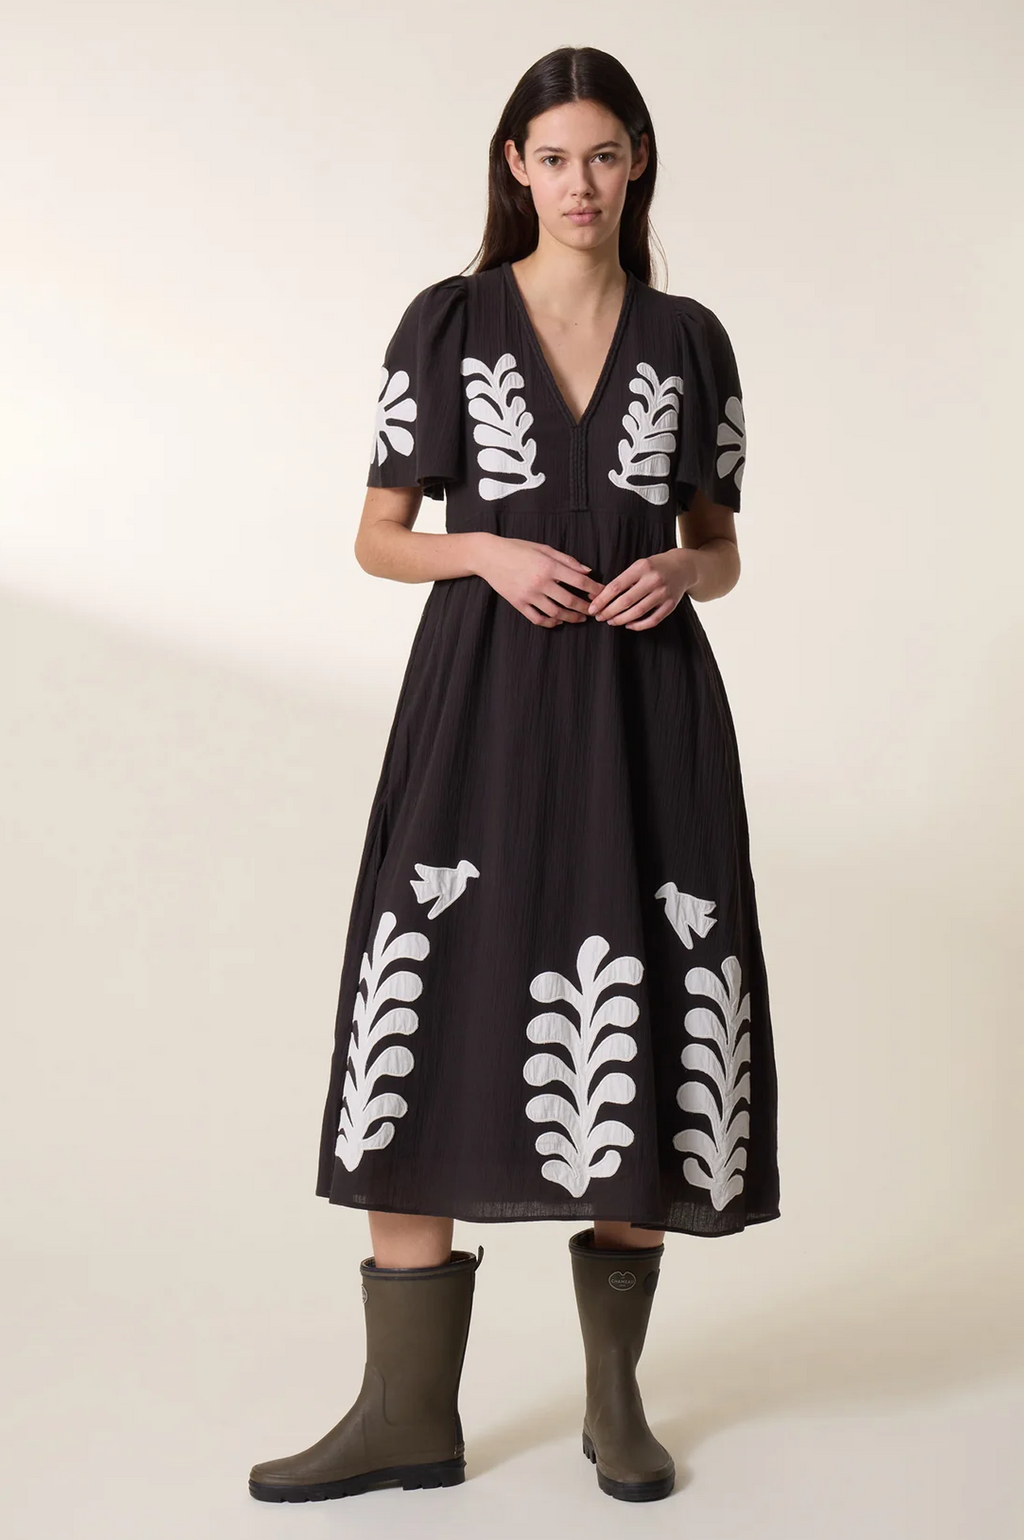 Leon & Harper Roe Birdy Carbon Dress - The Mercantile London